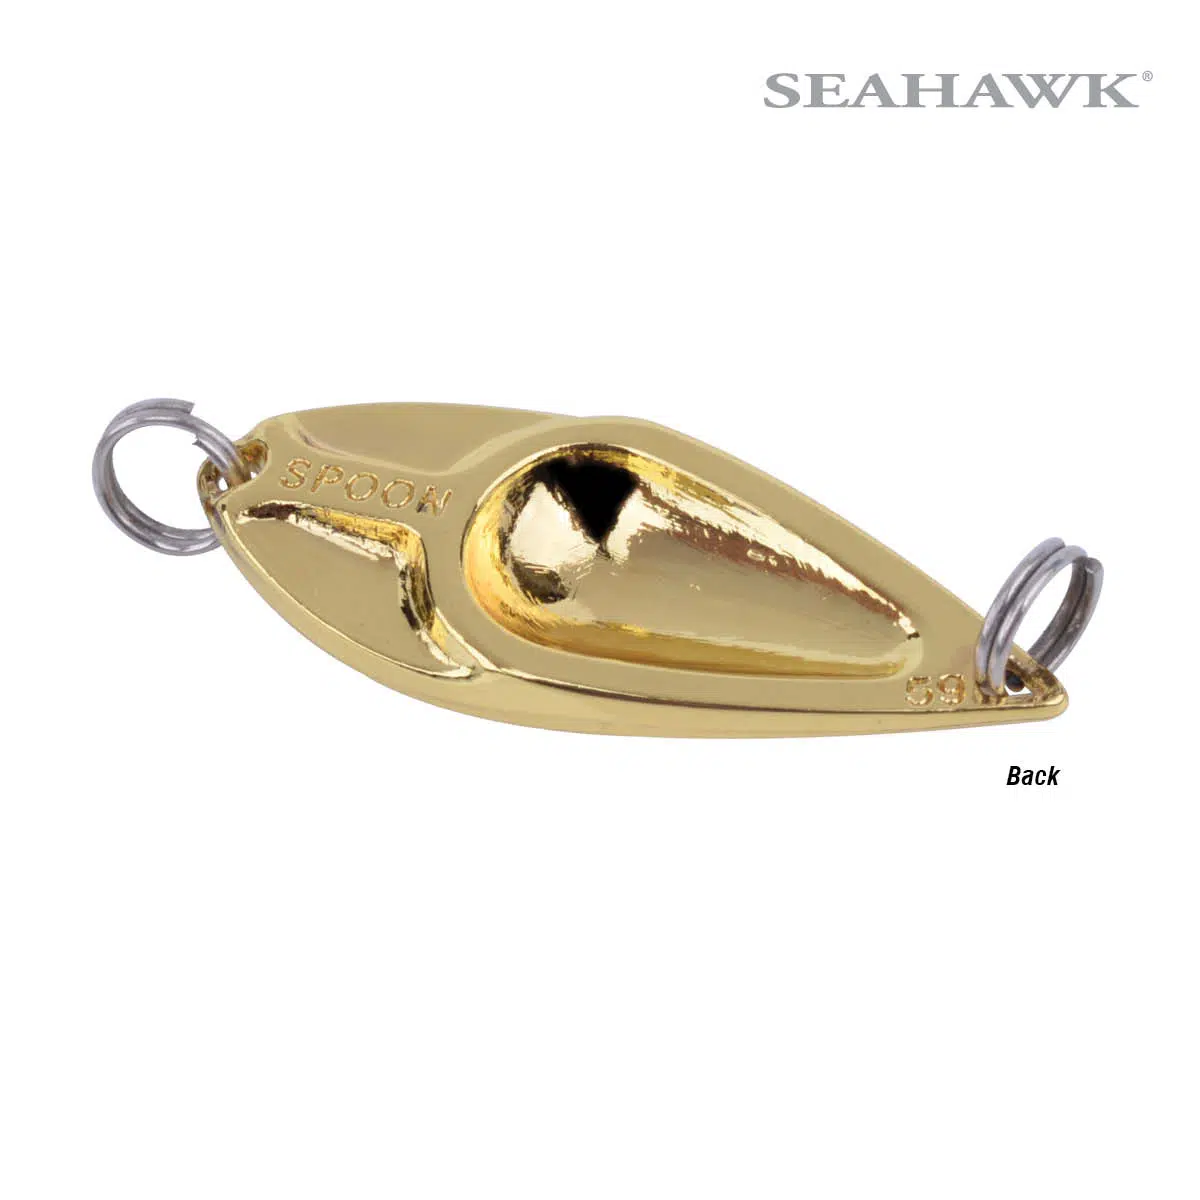 https://seahawkfishing.com/wp-content/uploads/2022/05/Seahawk-Amago-Micro-Spoon-2116-02.jpg.webp